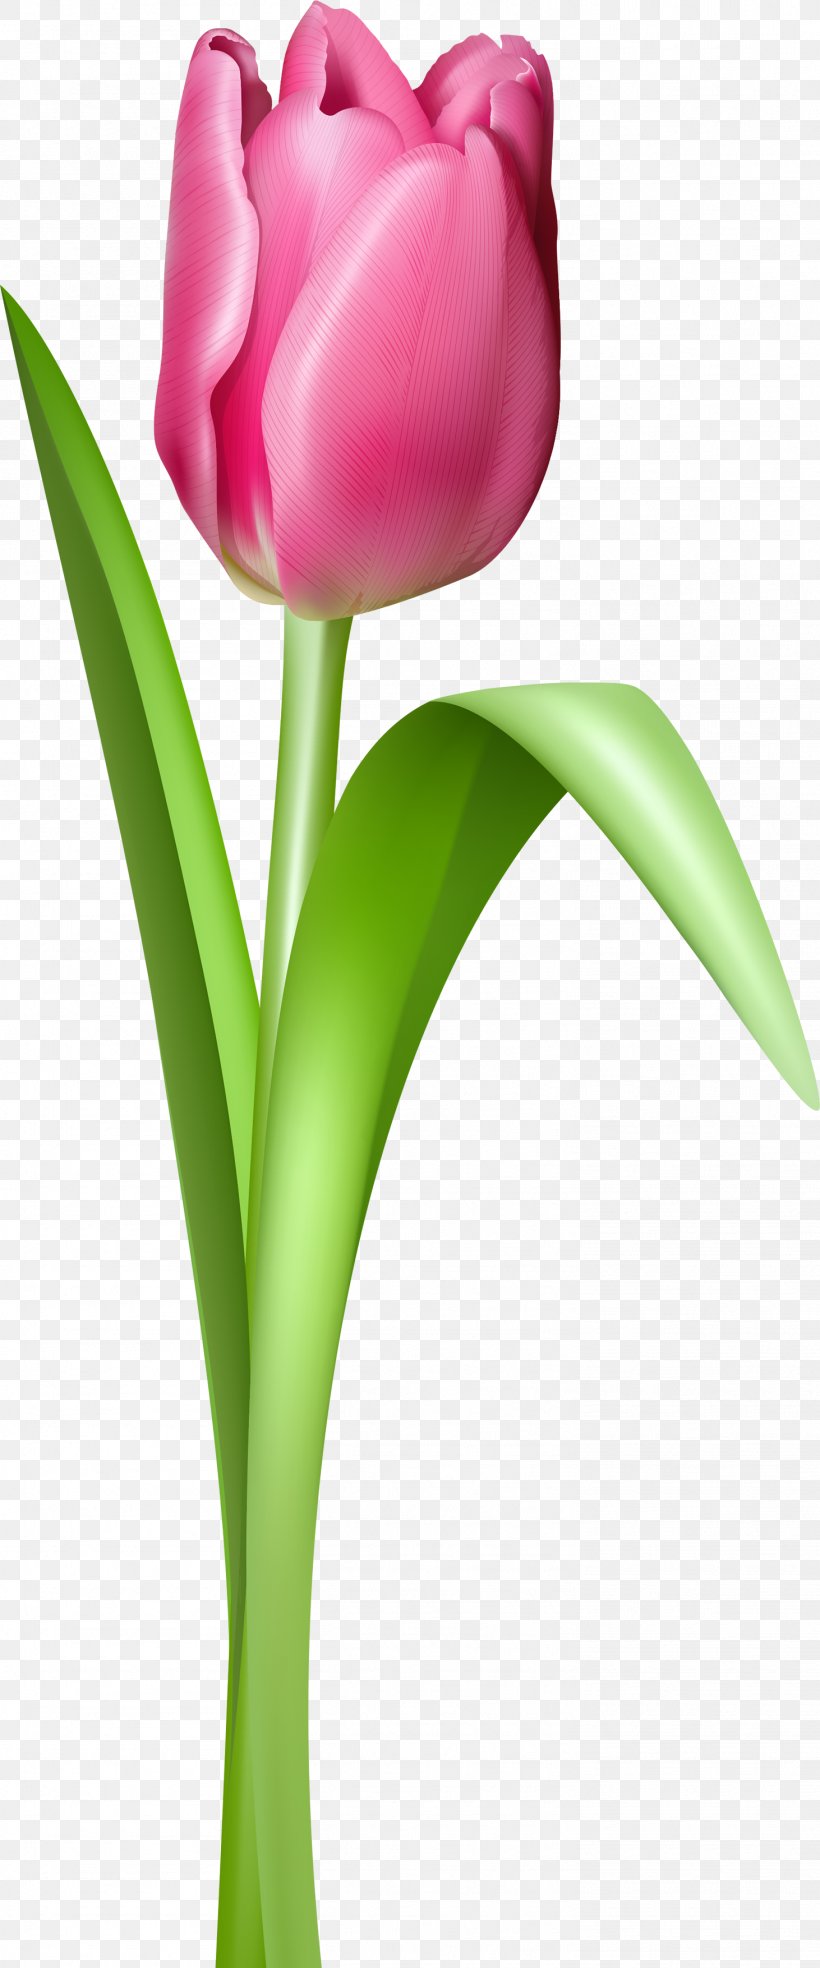 Indira Gandhi Memorial Tulip Garden Clip Art Image, PNG, 1462x3509px, Indira Gandhi Memorial Tulip Garden, Bud, Cut Flowers, Drawing, Flower Download Free